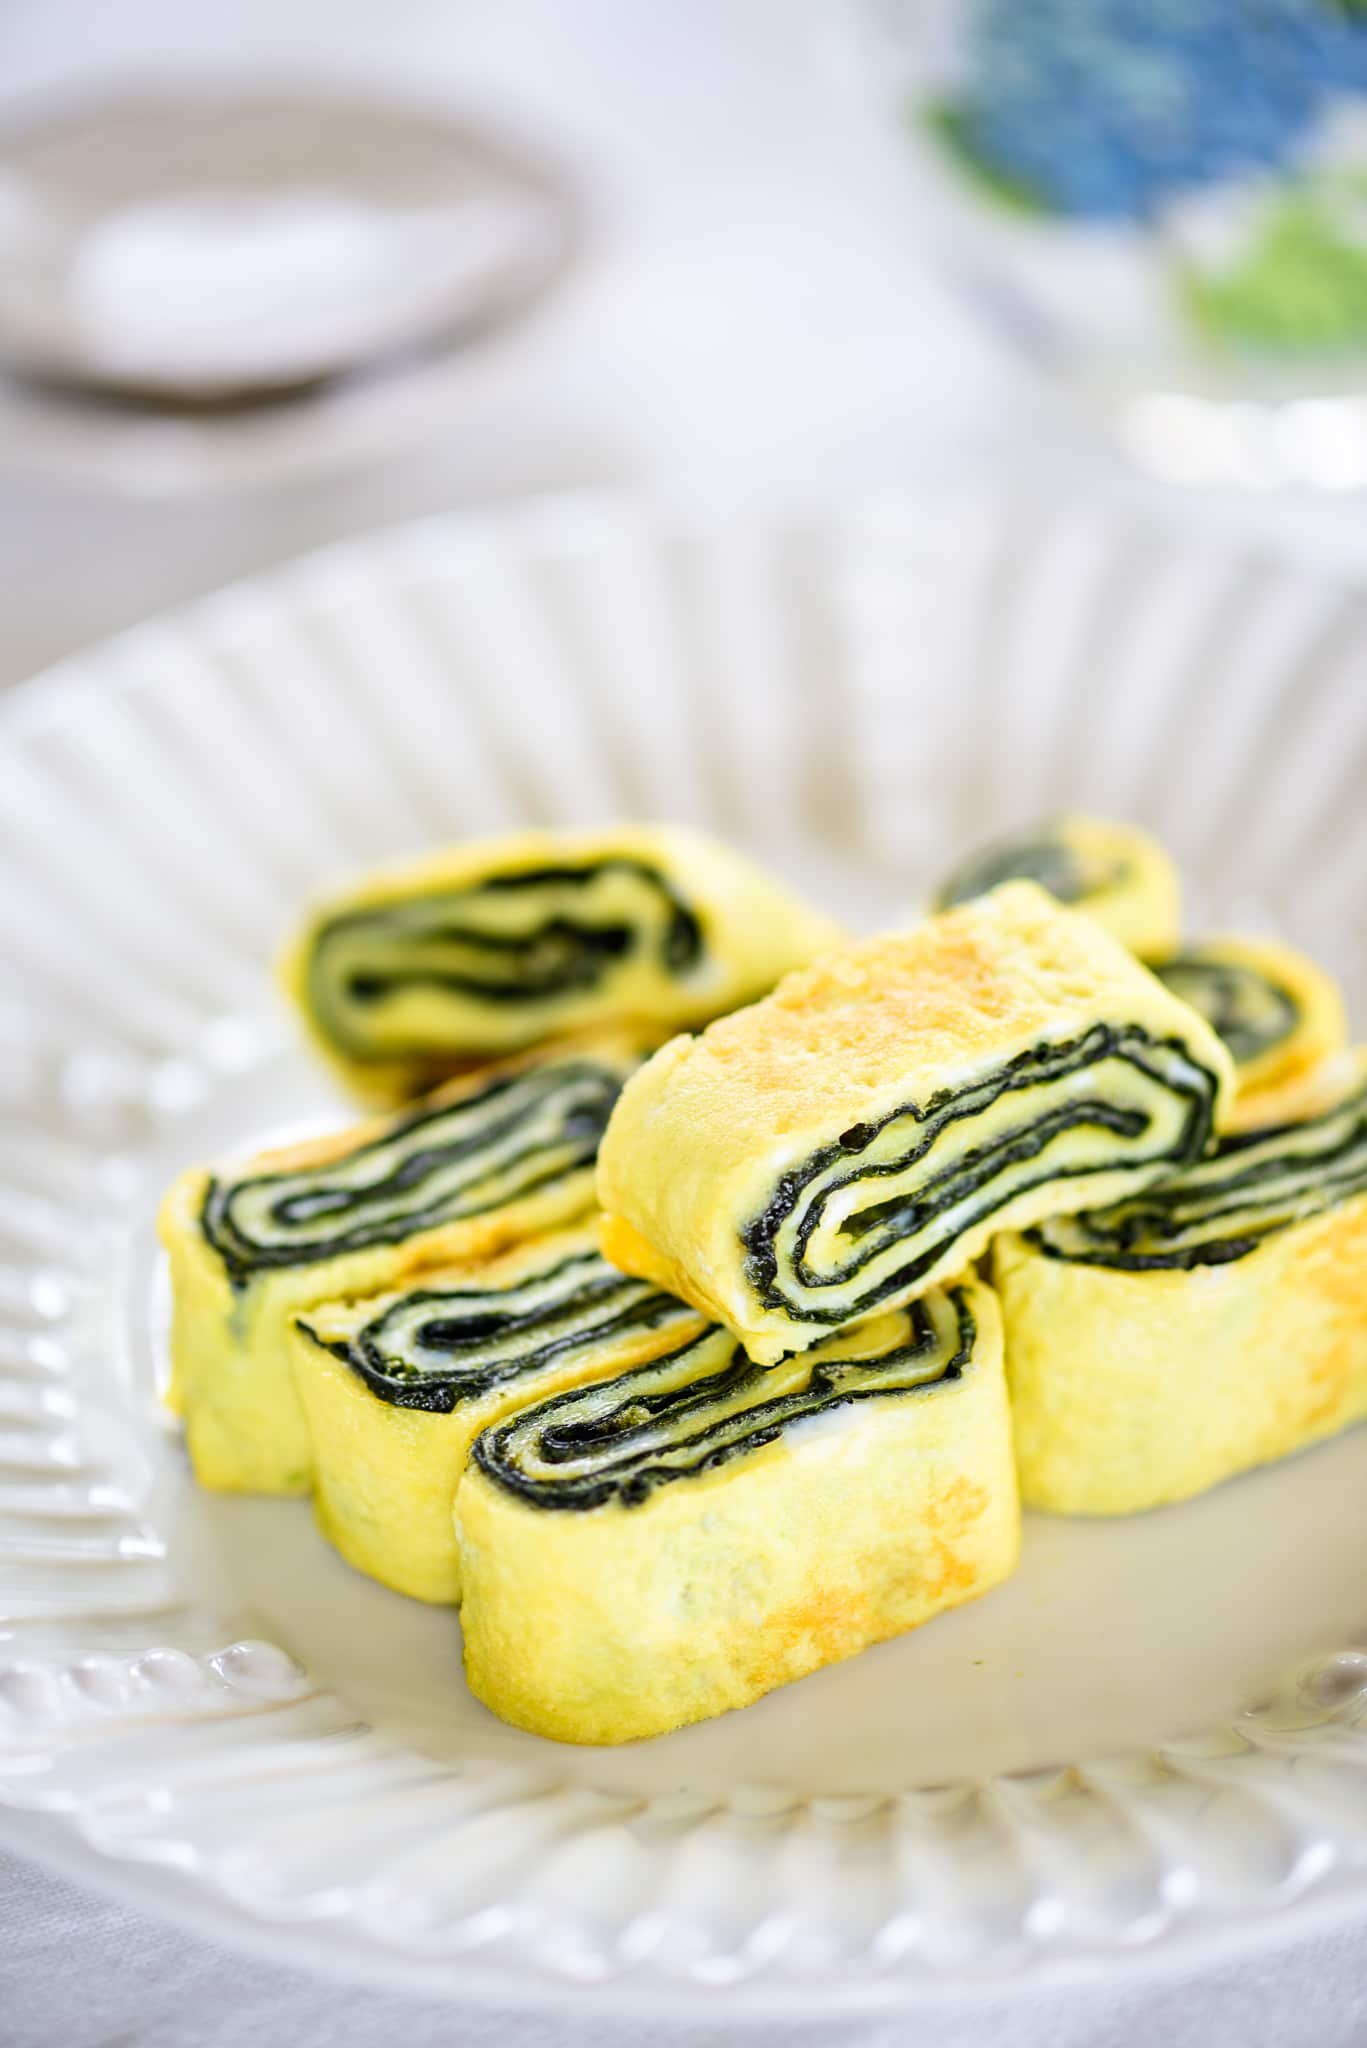 Gyeran Mari (Rolled Omelette) with Seaweed